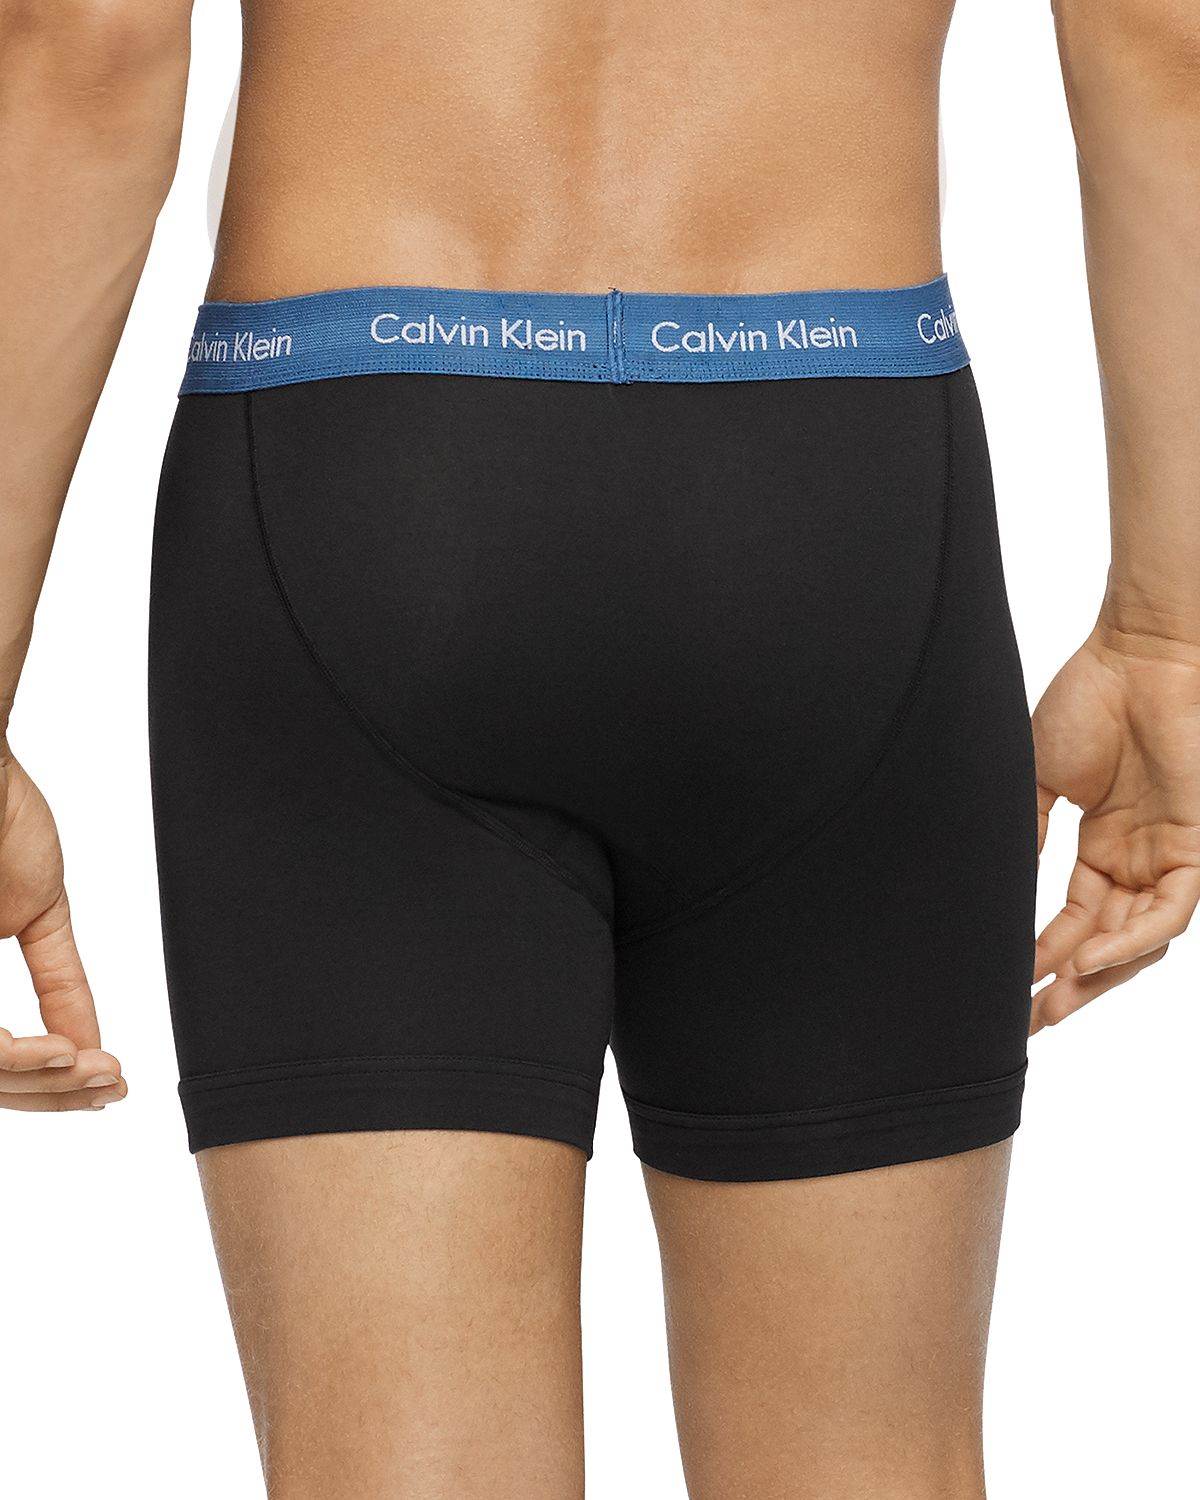 Calvin Klein Cotton Stretch Boxer Briefs Pack Of 3 Black/Gray/Pink